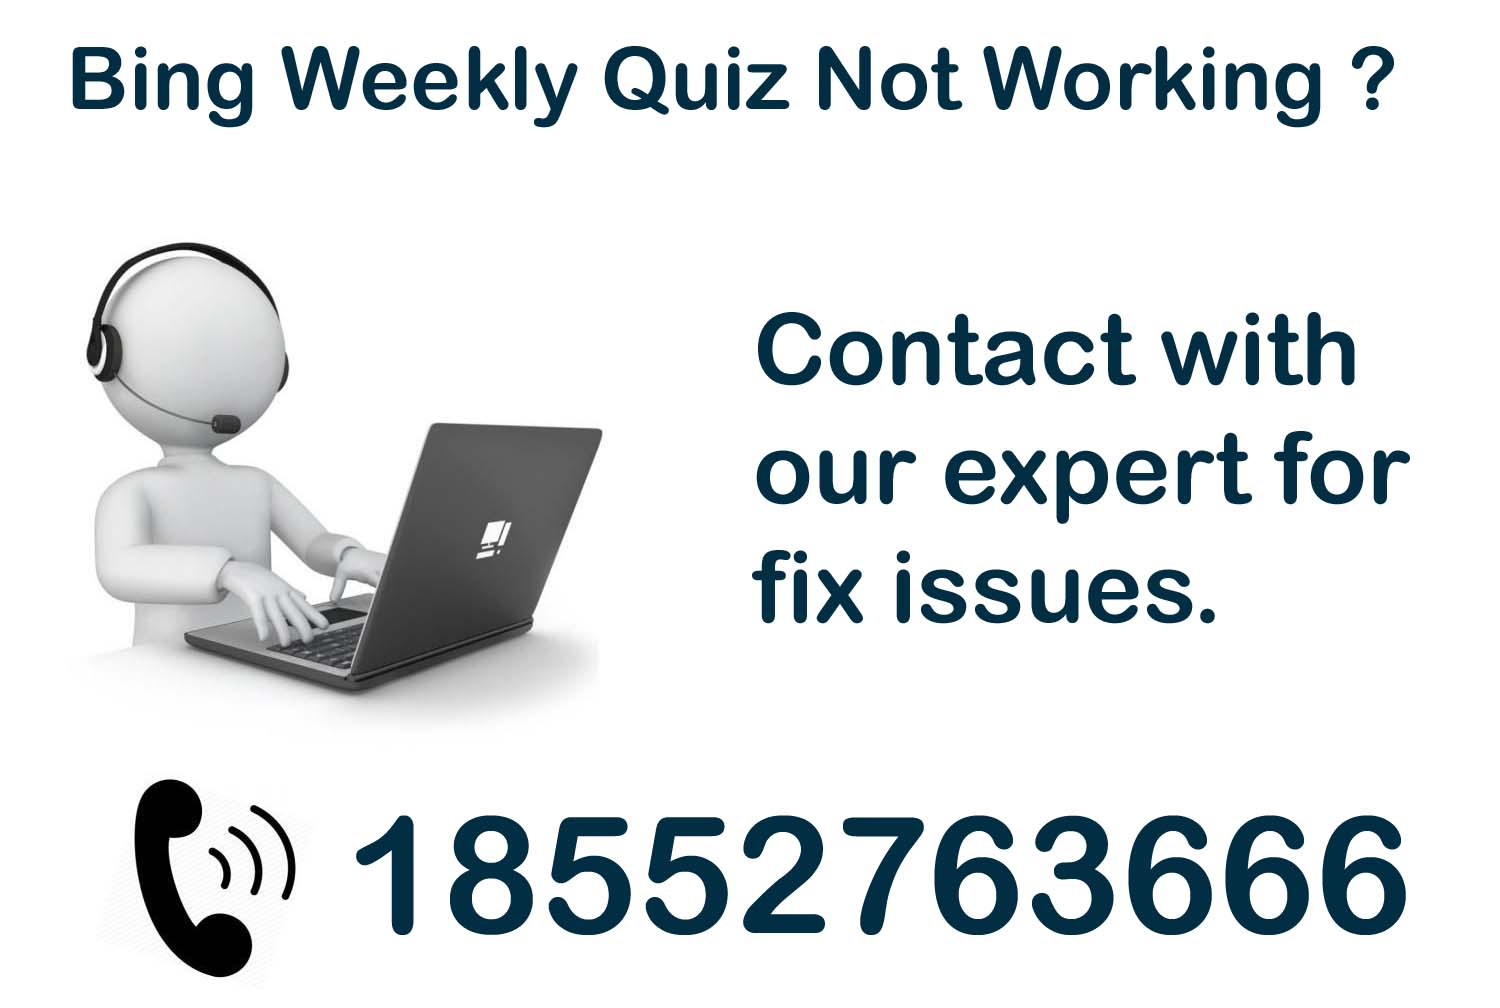 Bing Weekly Quiz Not Working ? Dial 18552763666